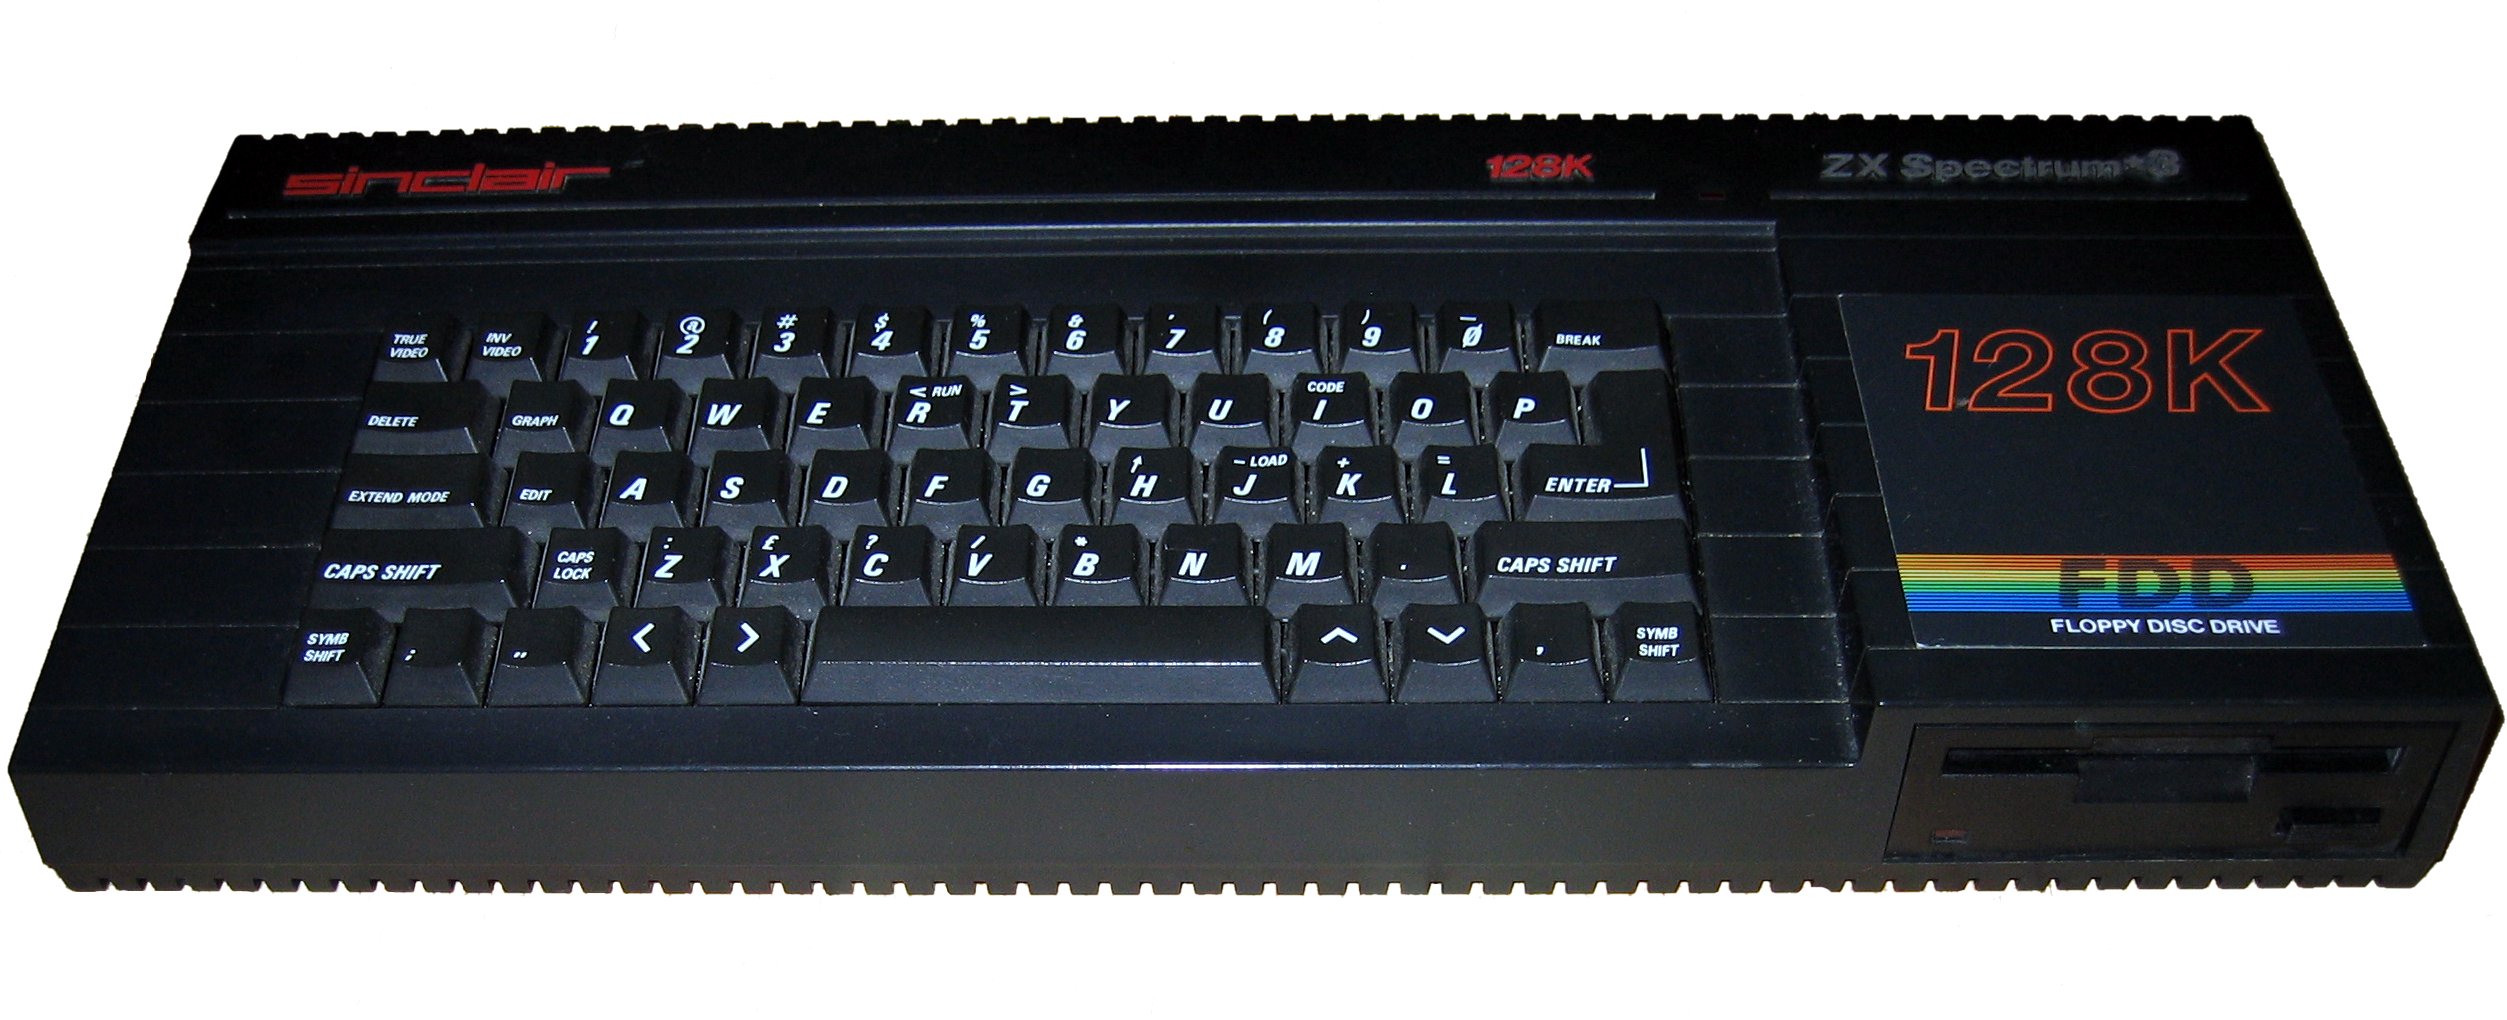 ZX Spectrum 128 +3 - Wikipedia, la enciclopedia libre